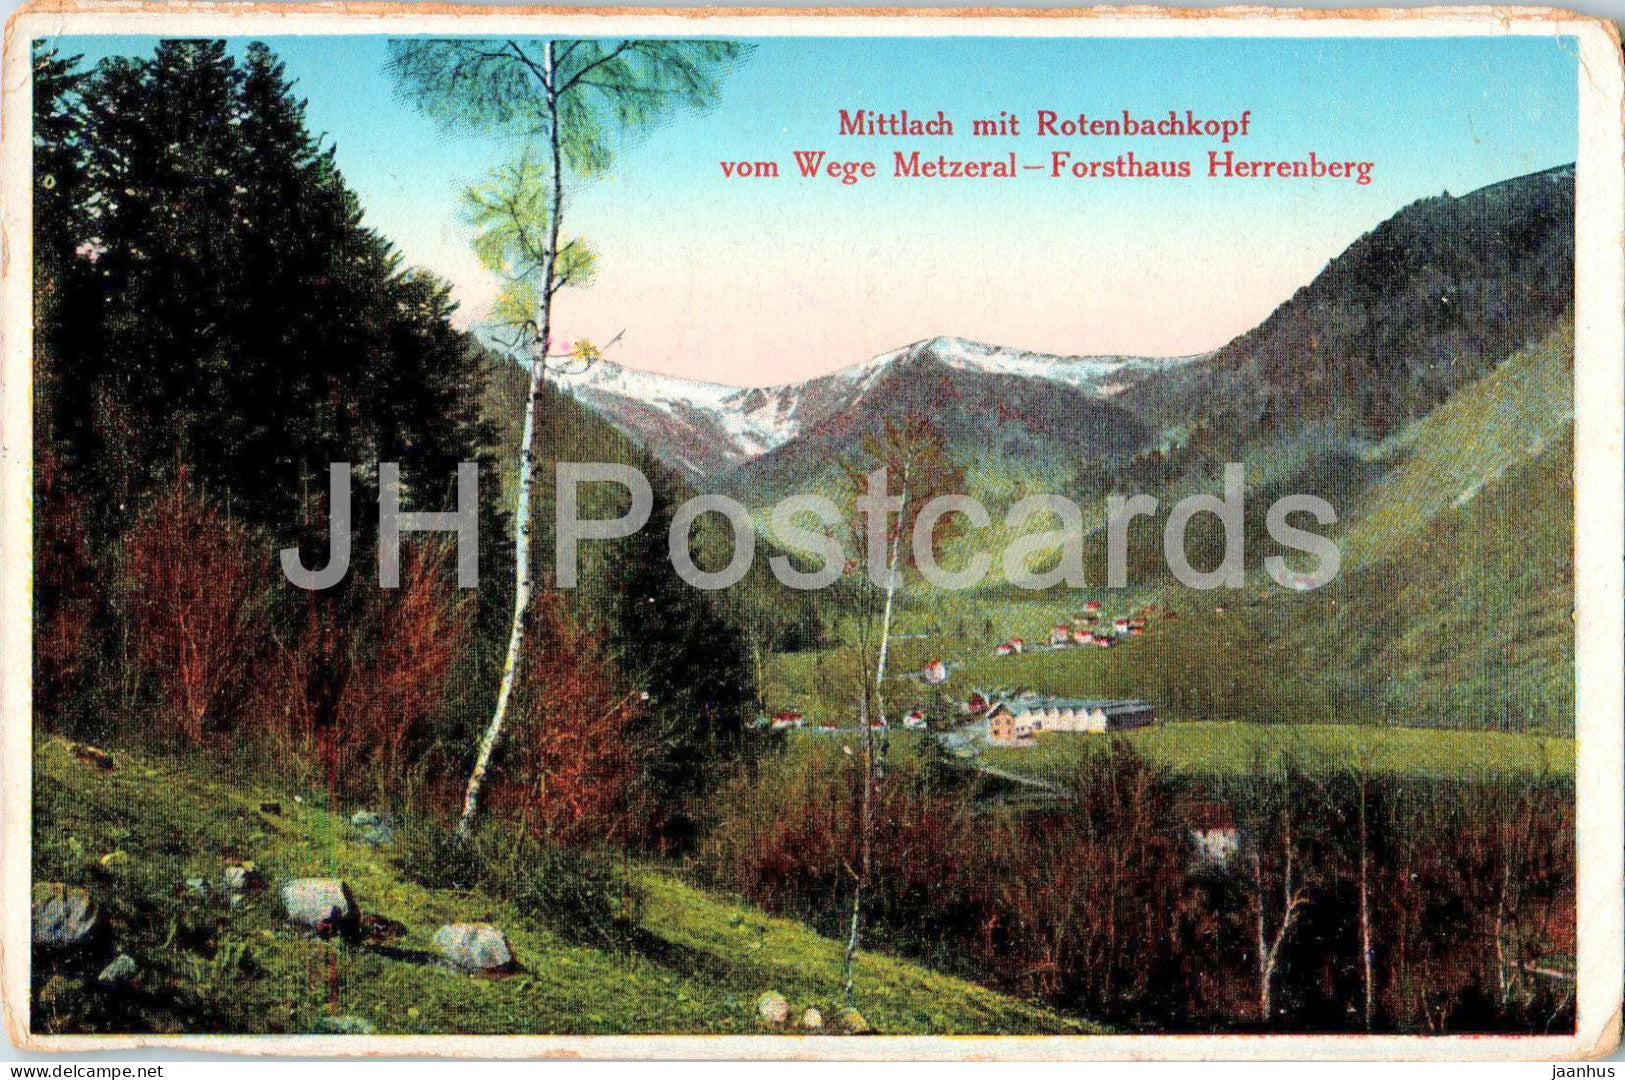 Mittlach mit Rotenbachkopf vom Wege Metzeral - Feldpost - military mail - old postcard - 1917 - France - used